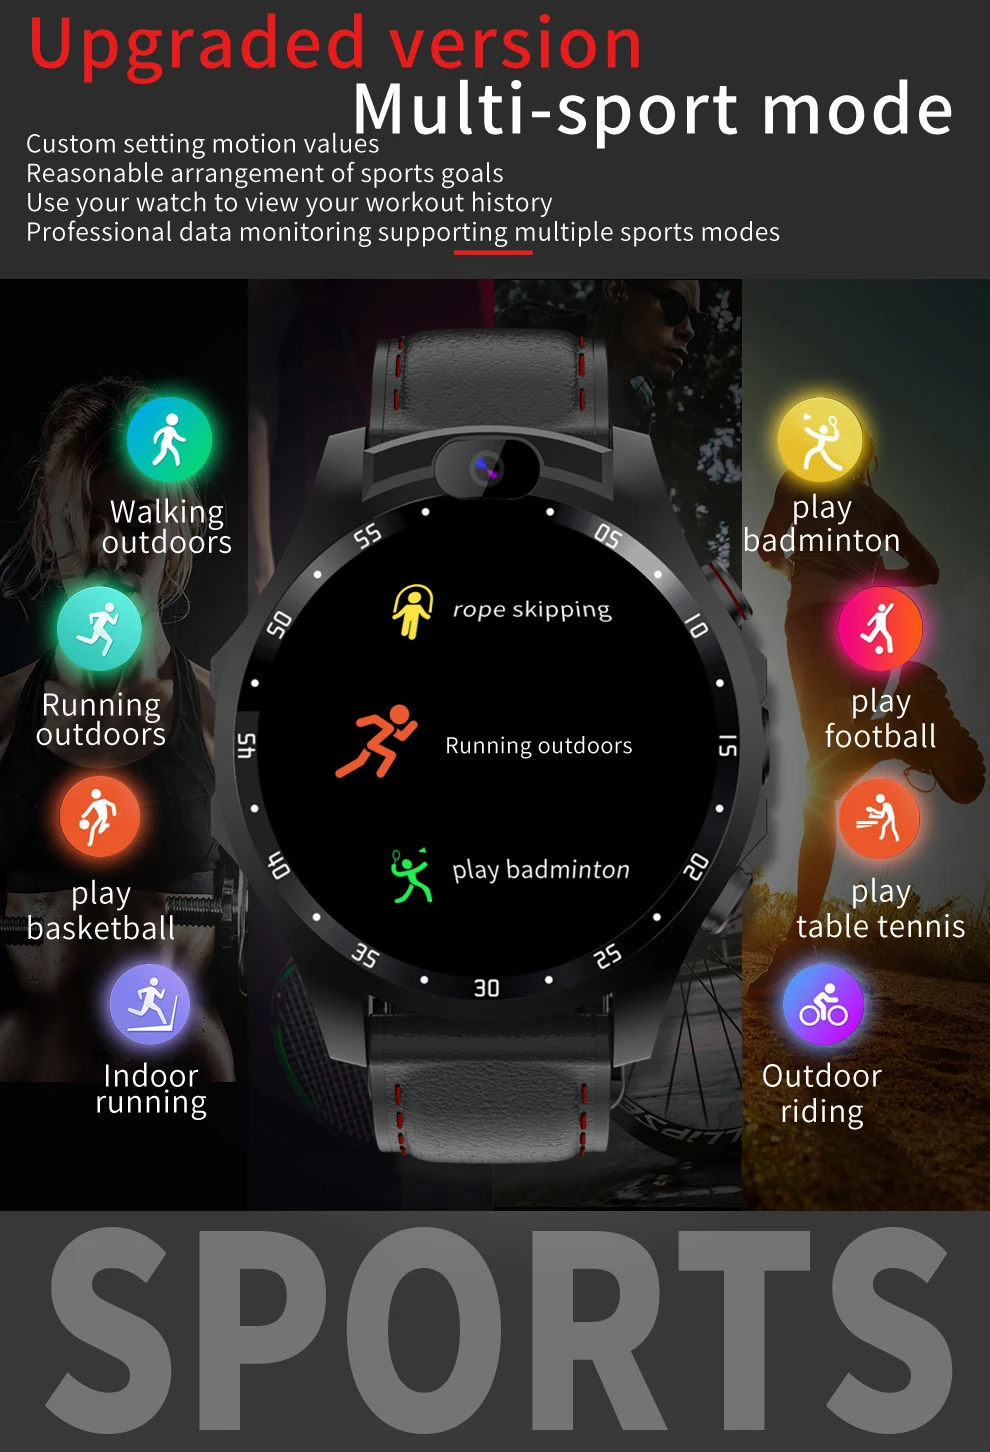 GOLDENSPIKE V9 4G умные часы для мужчин wo для мужчин Android 7,1 3GB32GB 800mAh батарея 1," 5.0MP камера gps WiFi Bluetooth 4,0 телефон часы